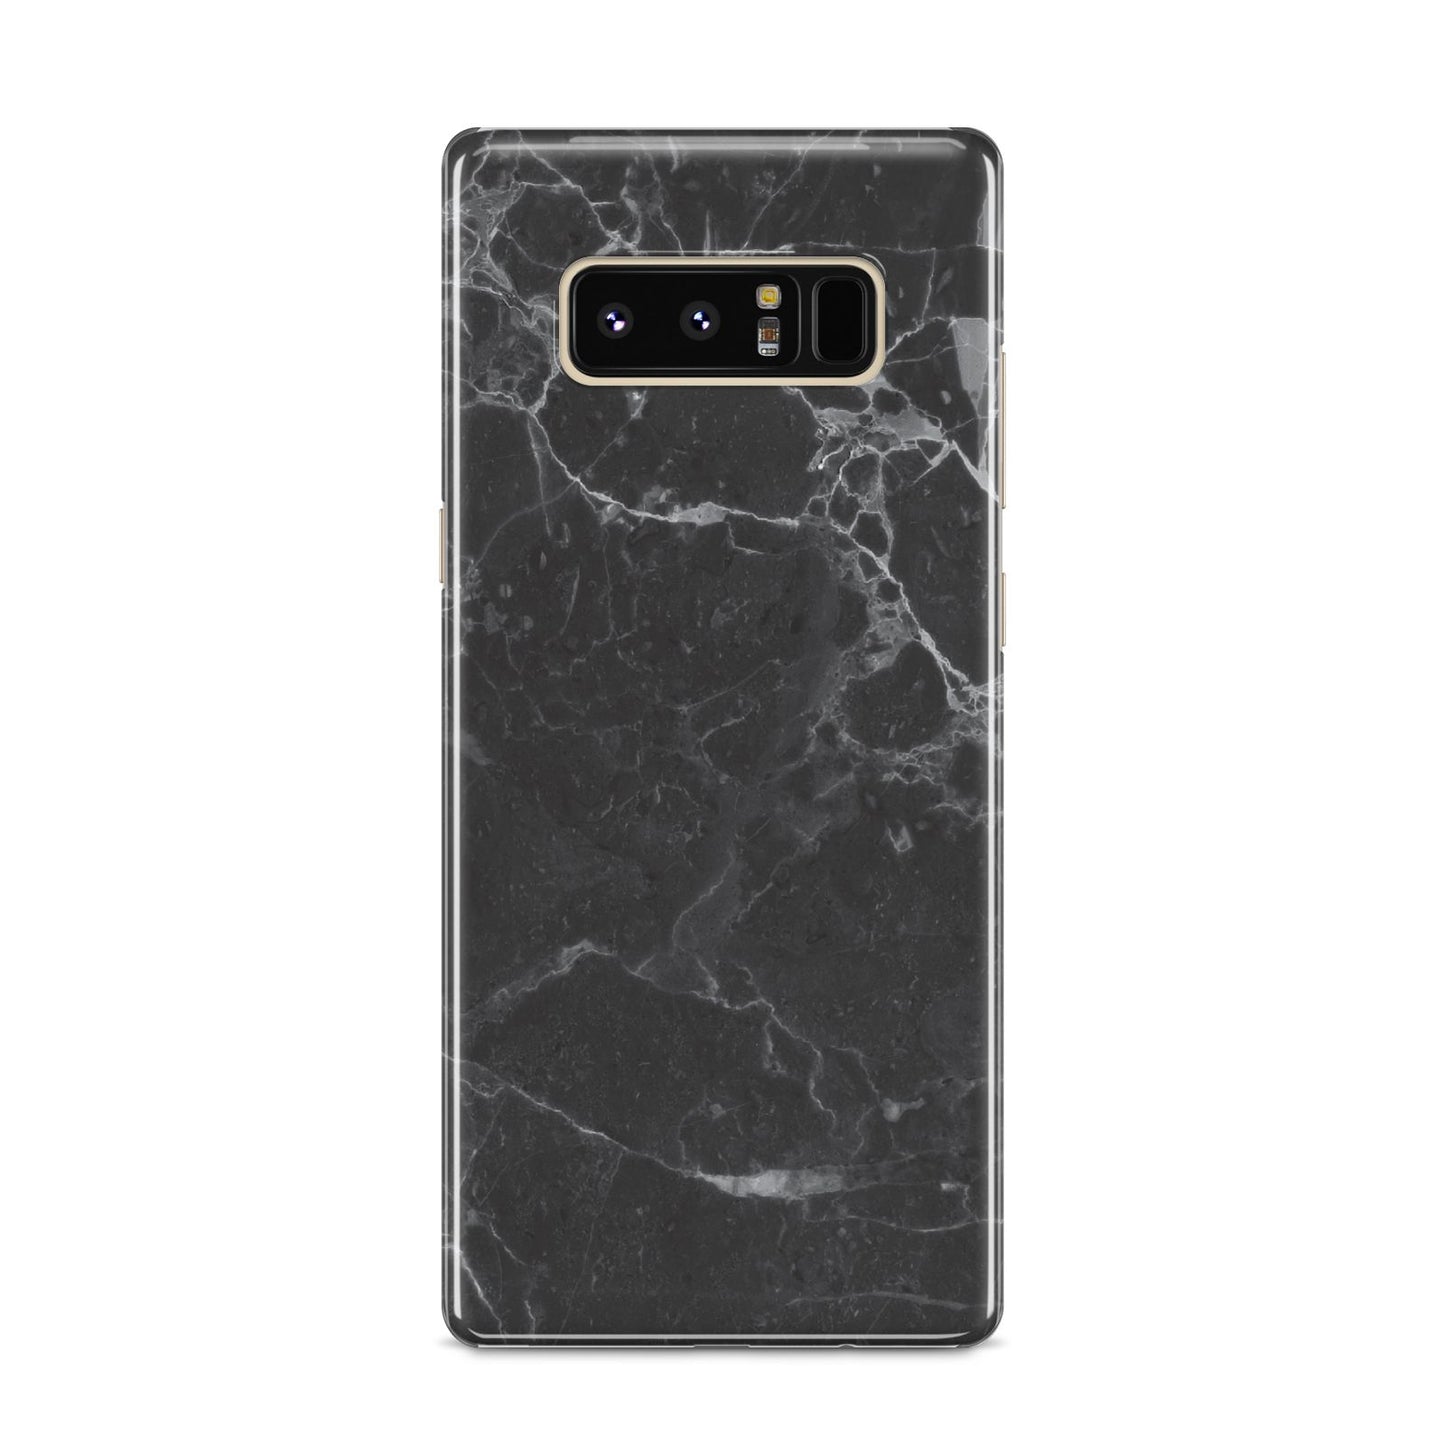 Faux Marble Effect Black Samsung Galaxy S8 Case